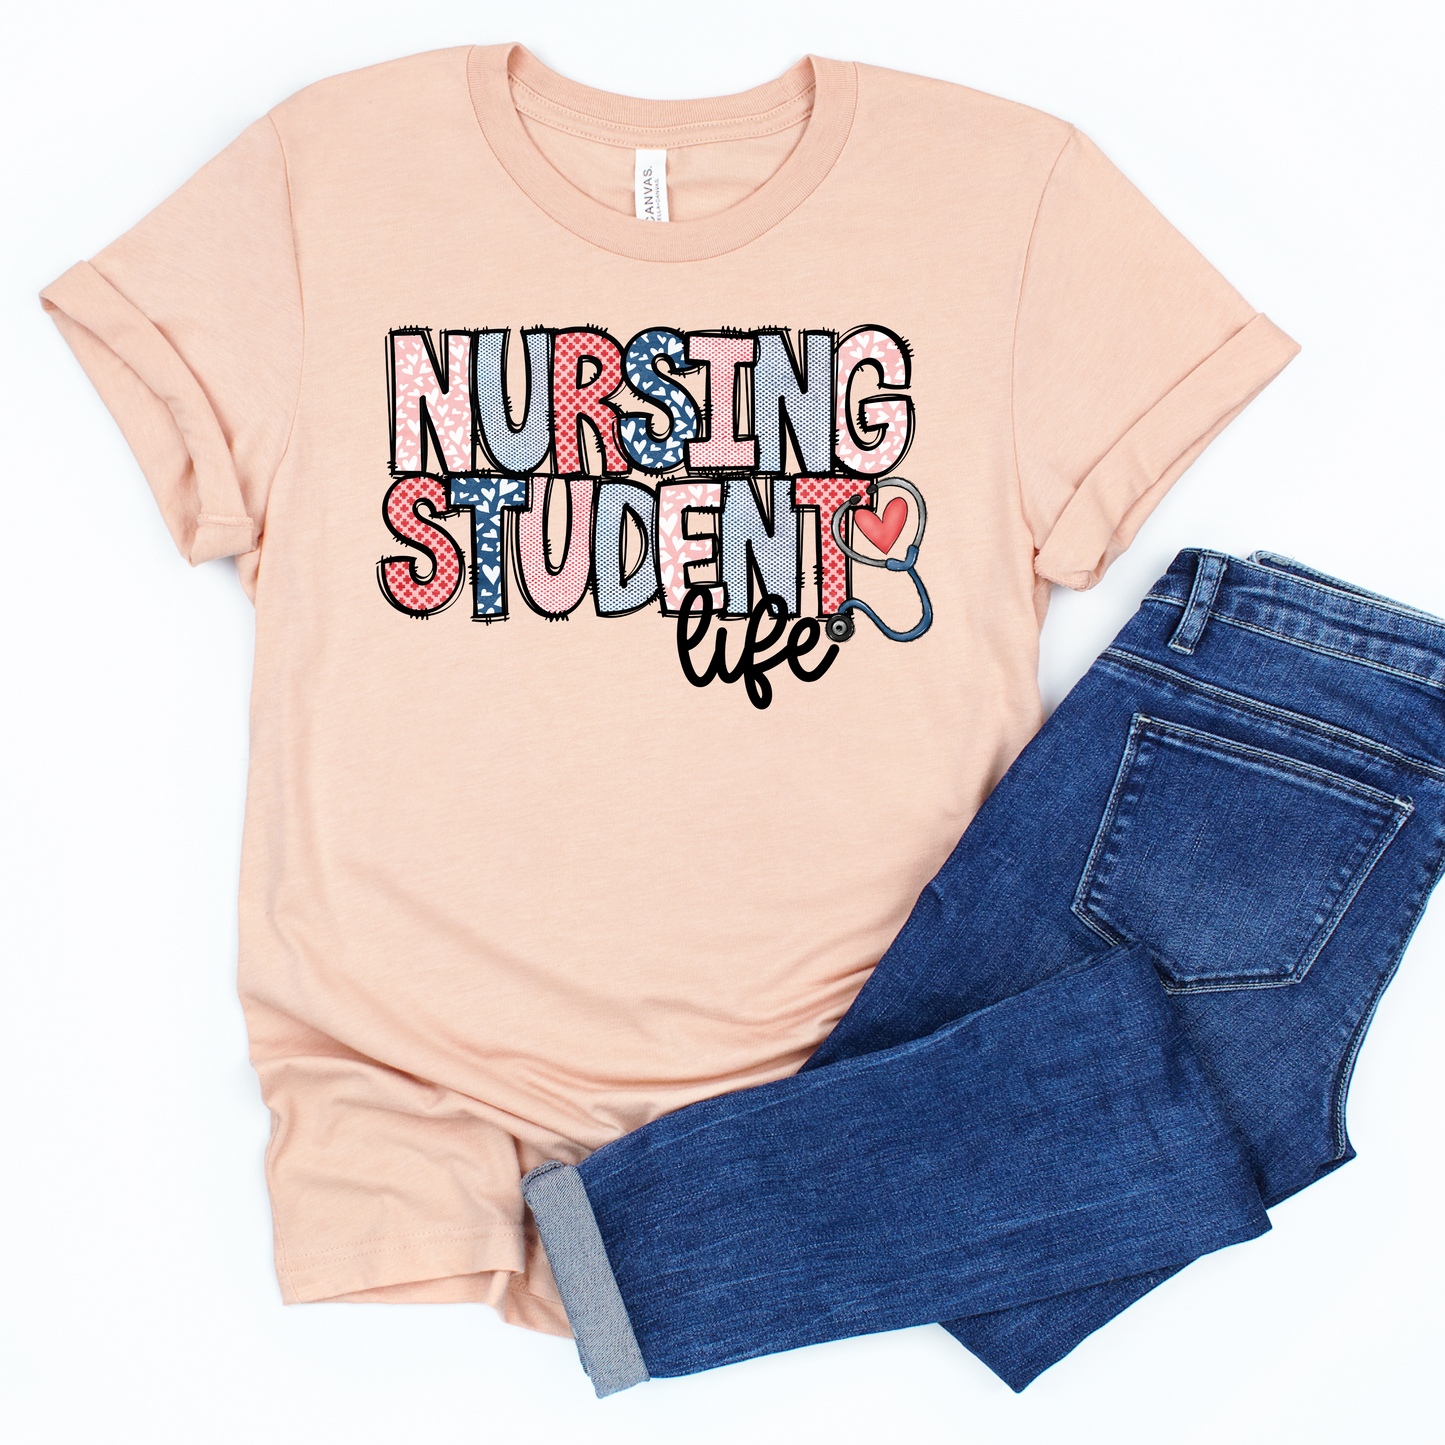 Nursing student life